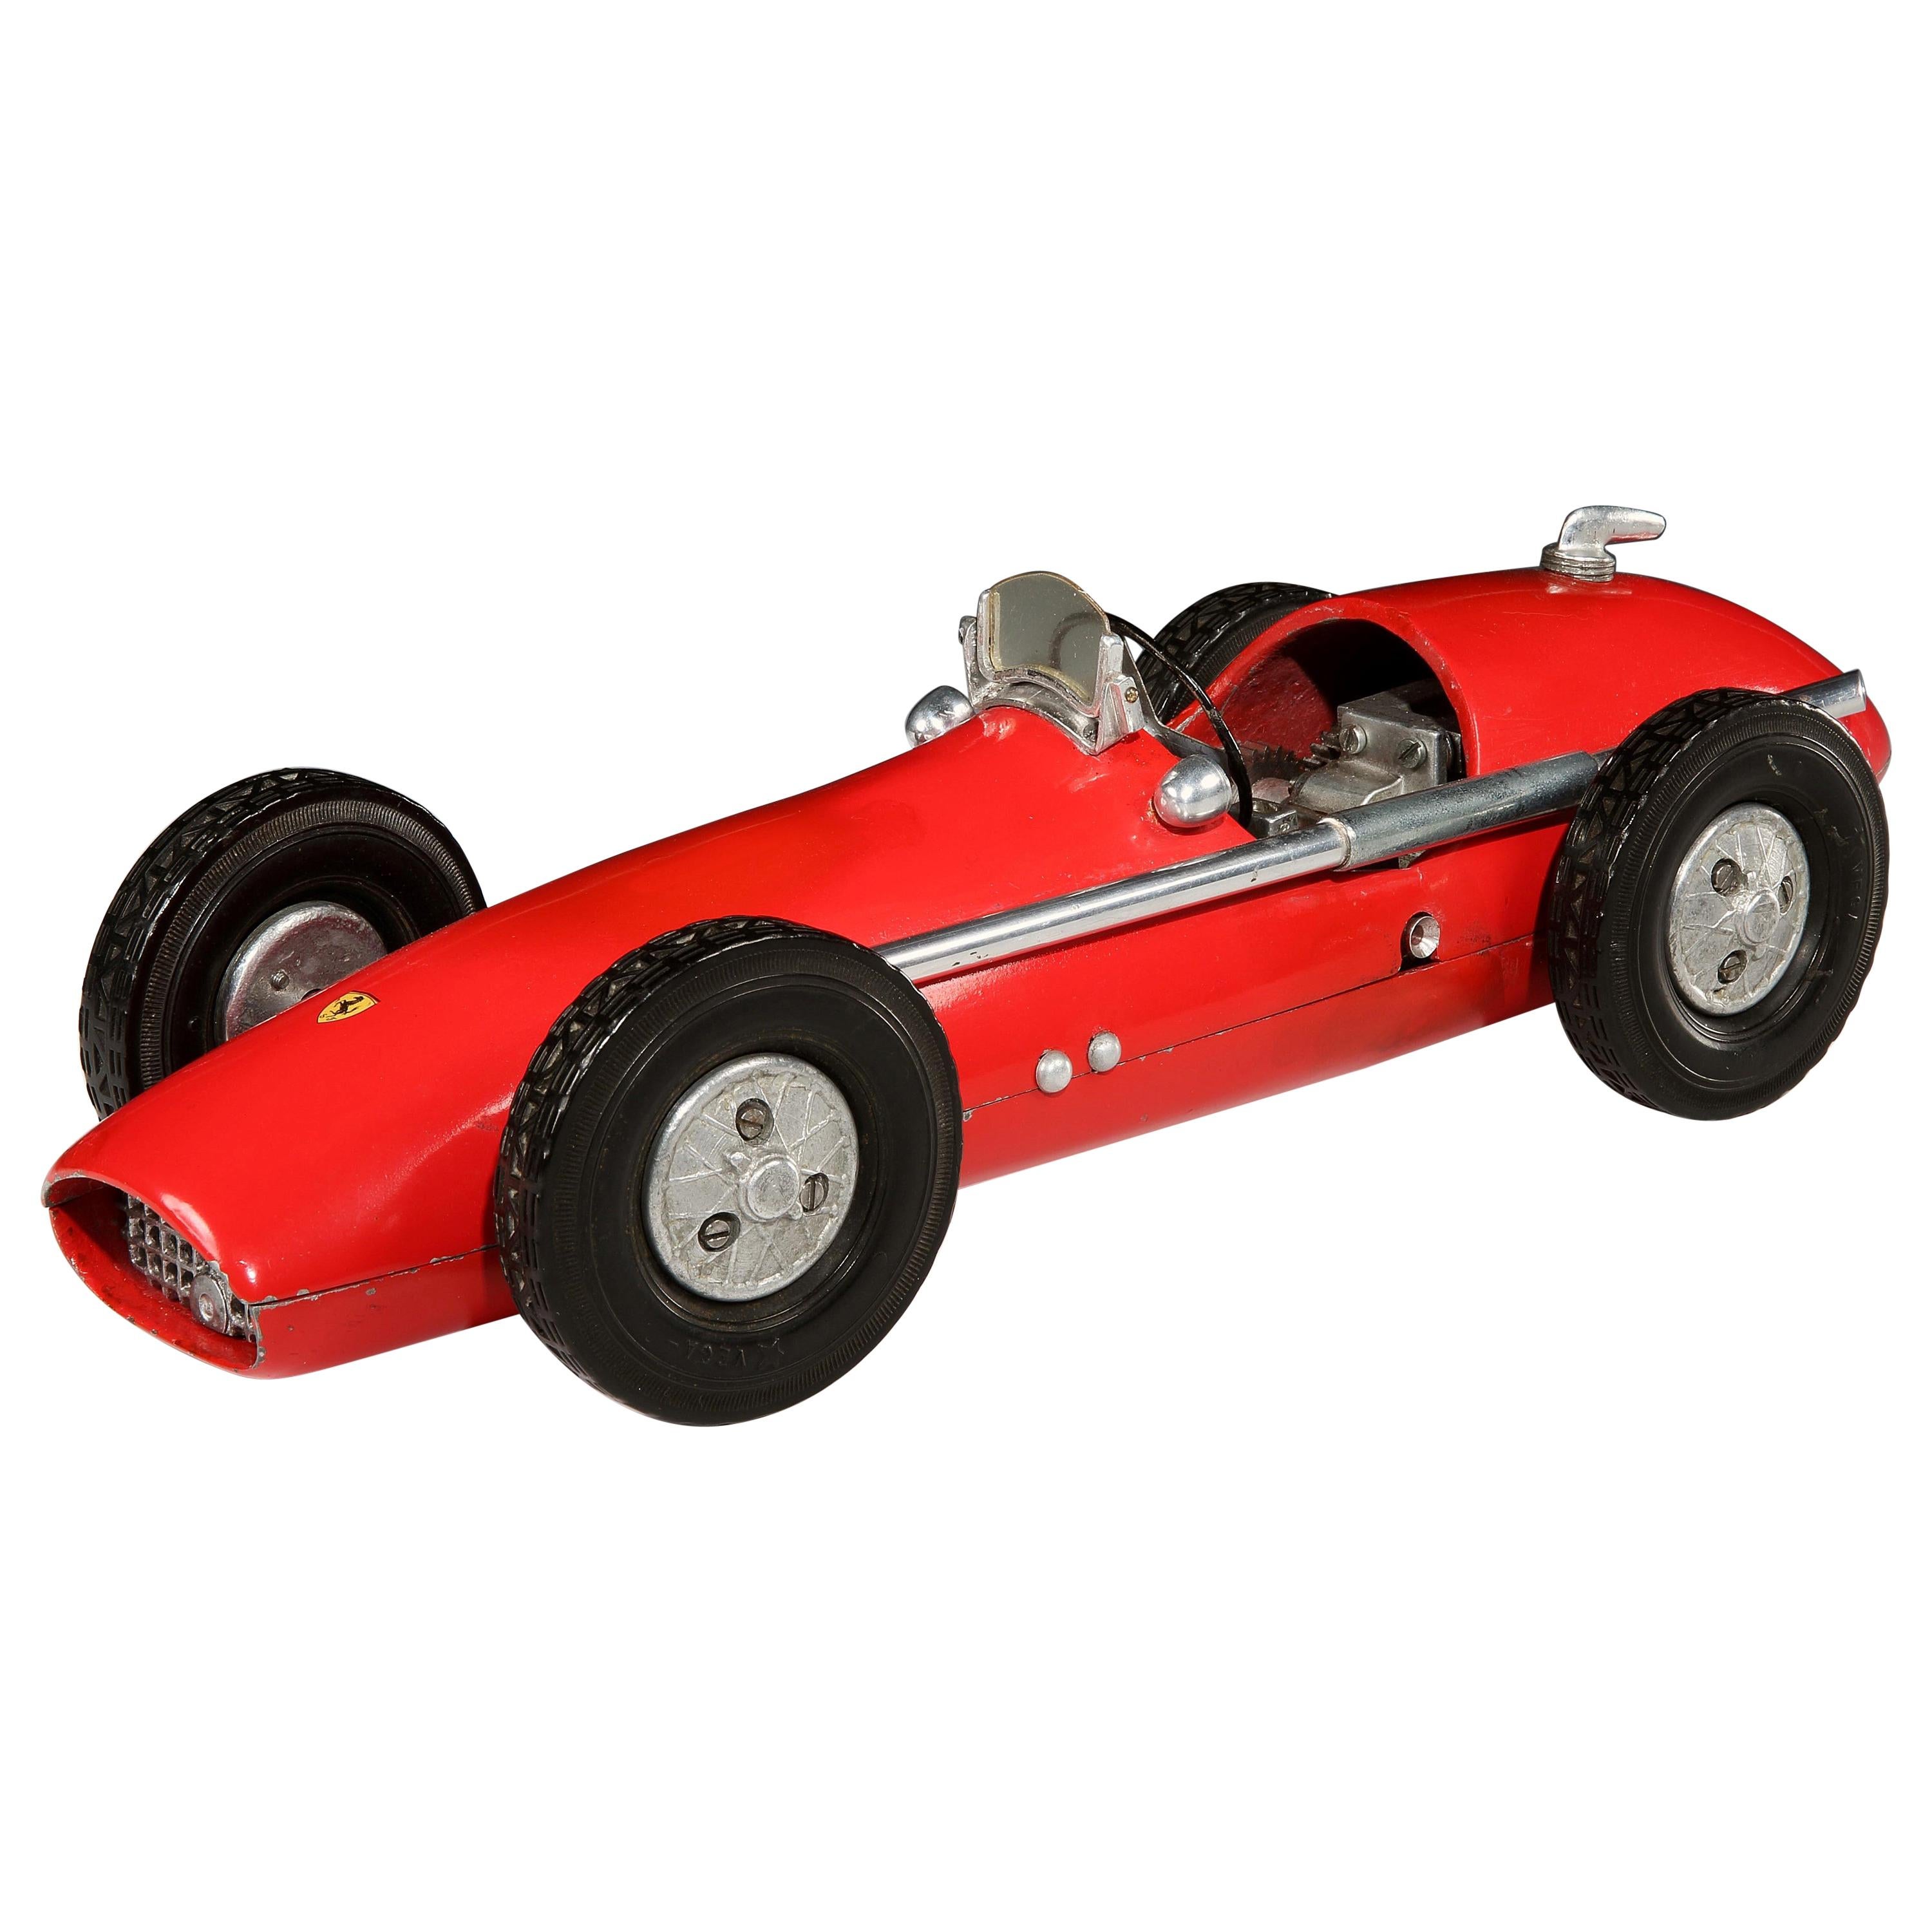 ‘Ferrari 500 F2' Cast Aluminium Pylon or 'Tether' Racing Car Toy by Vega, 1952